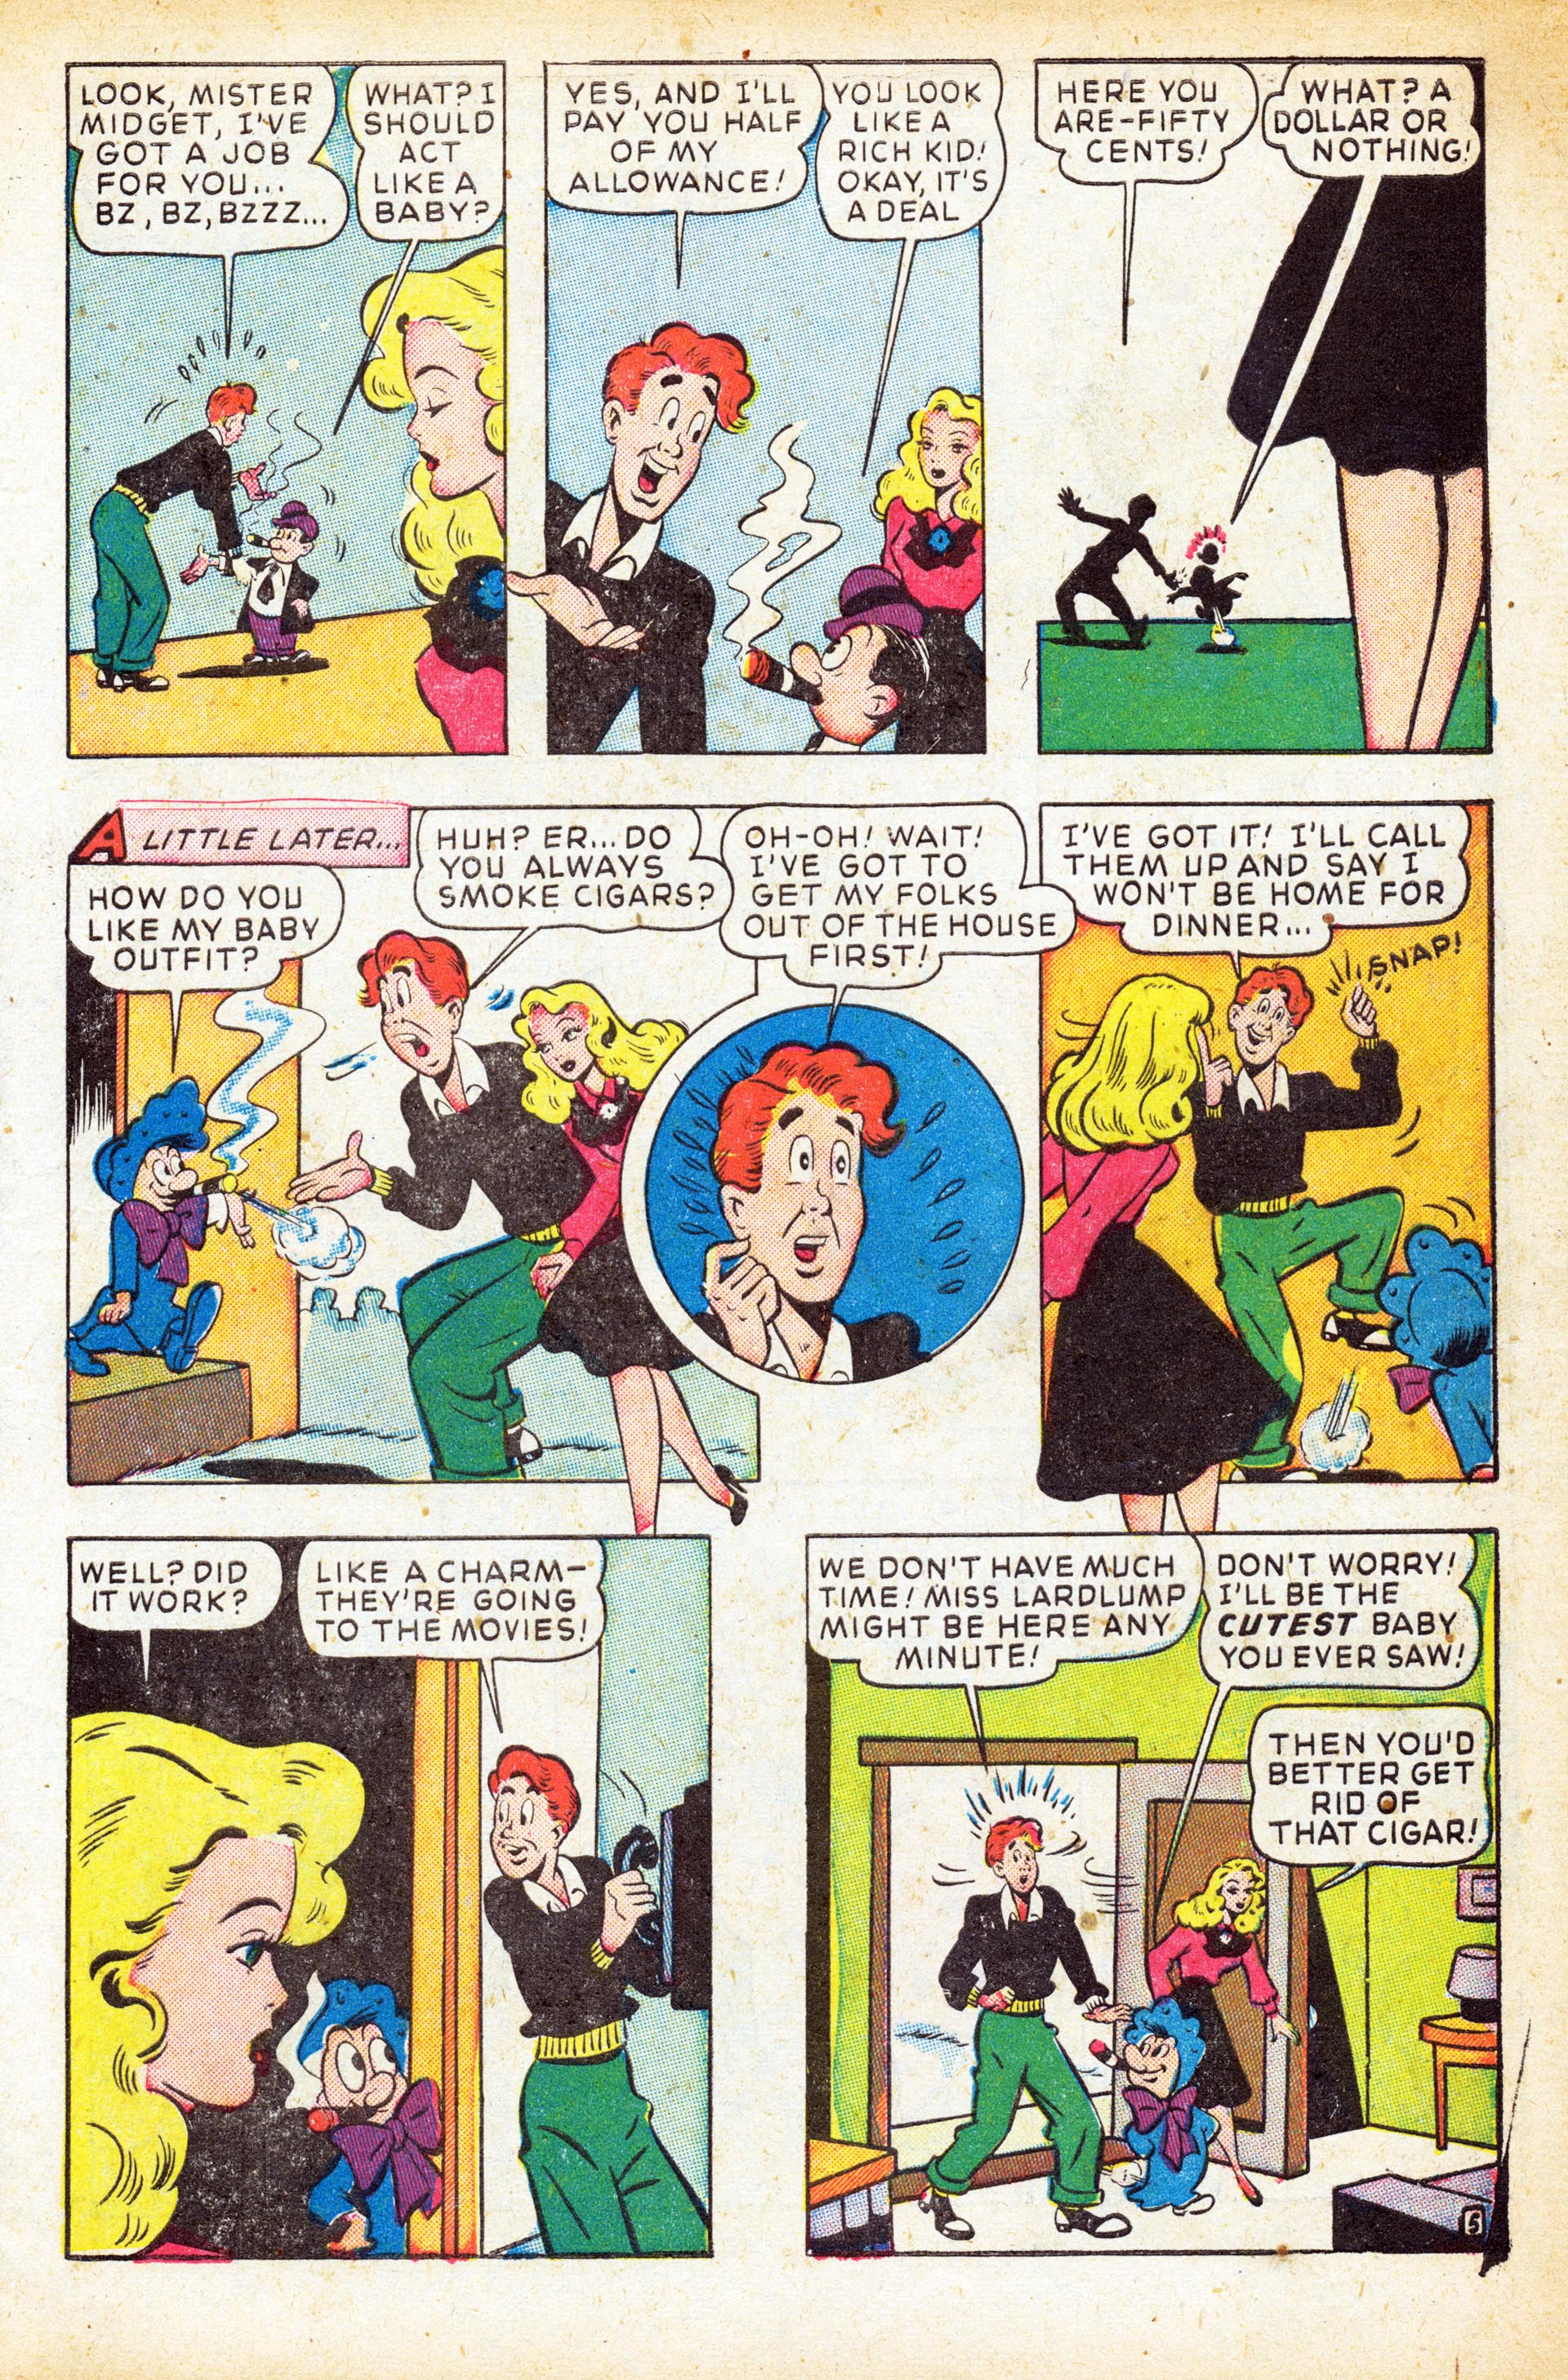 Archie Comics Midget - Willie Comics 16 | Read Willie Comics 16 comic online in high quality. Read  Full Comic online for free - Read comics online in high quality .